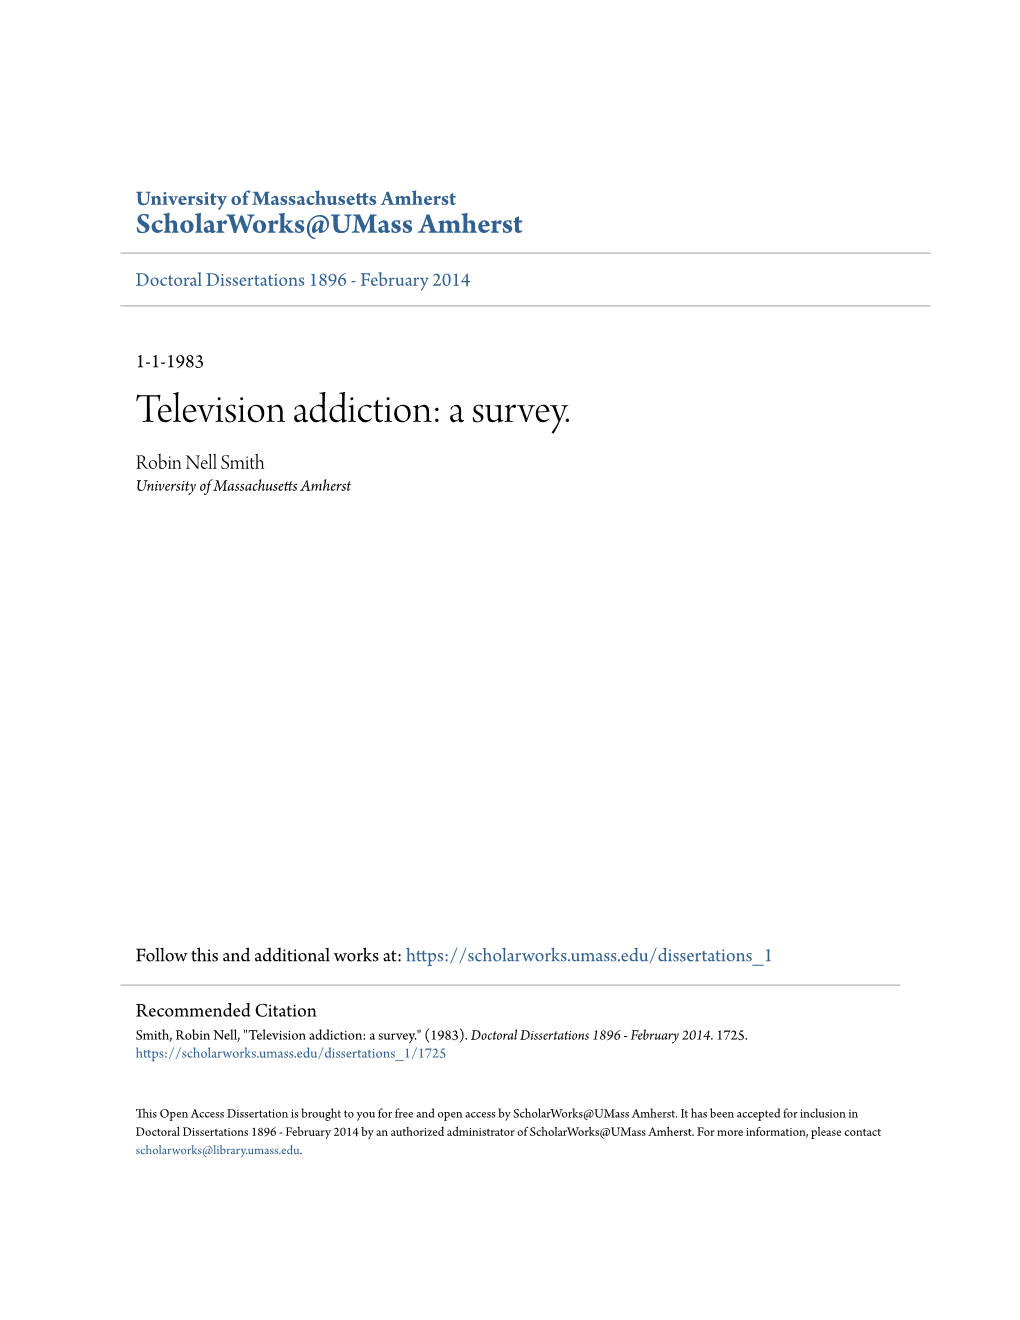 Television Addiction: a Survey